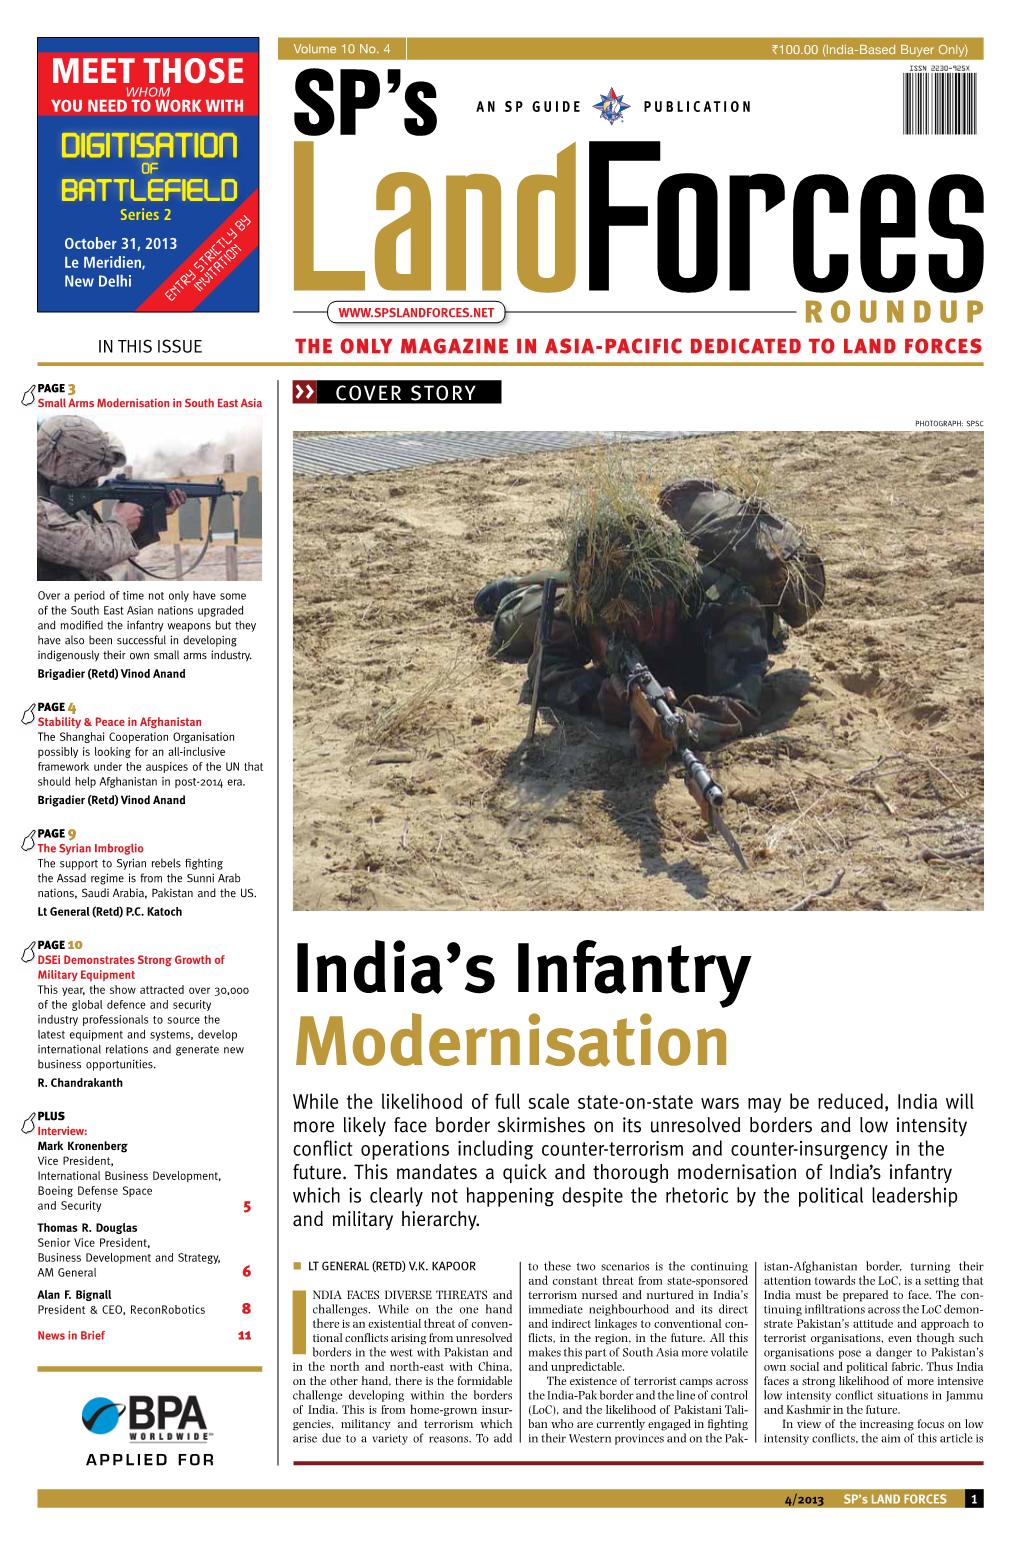 India's Infantry Modernisation